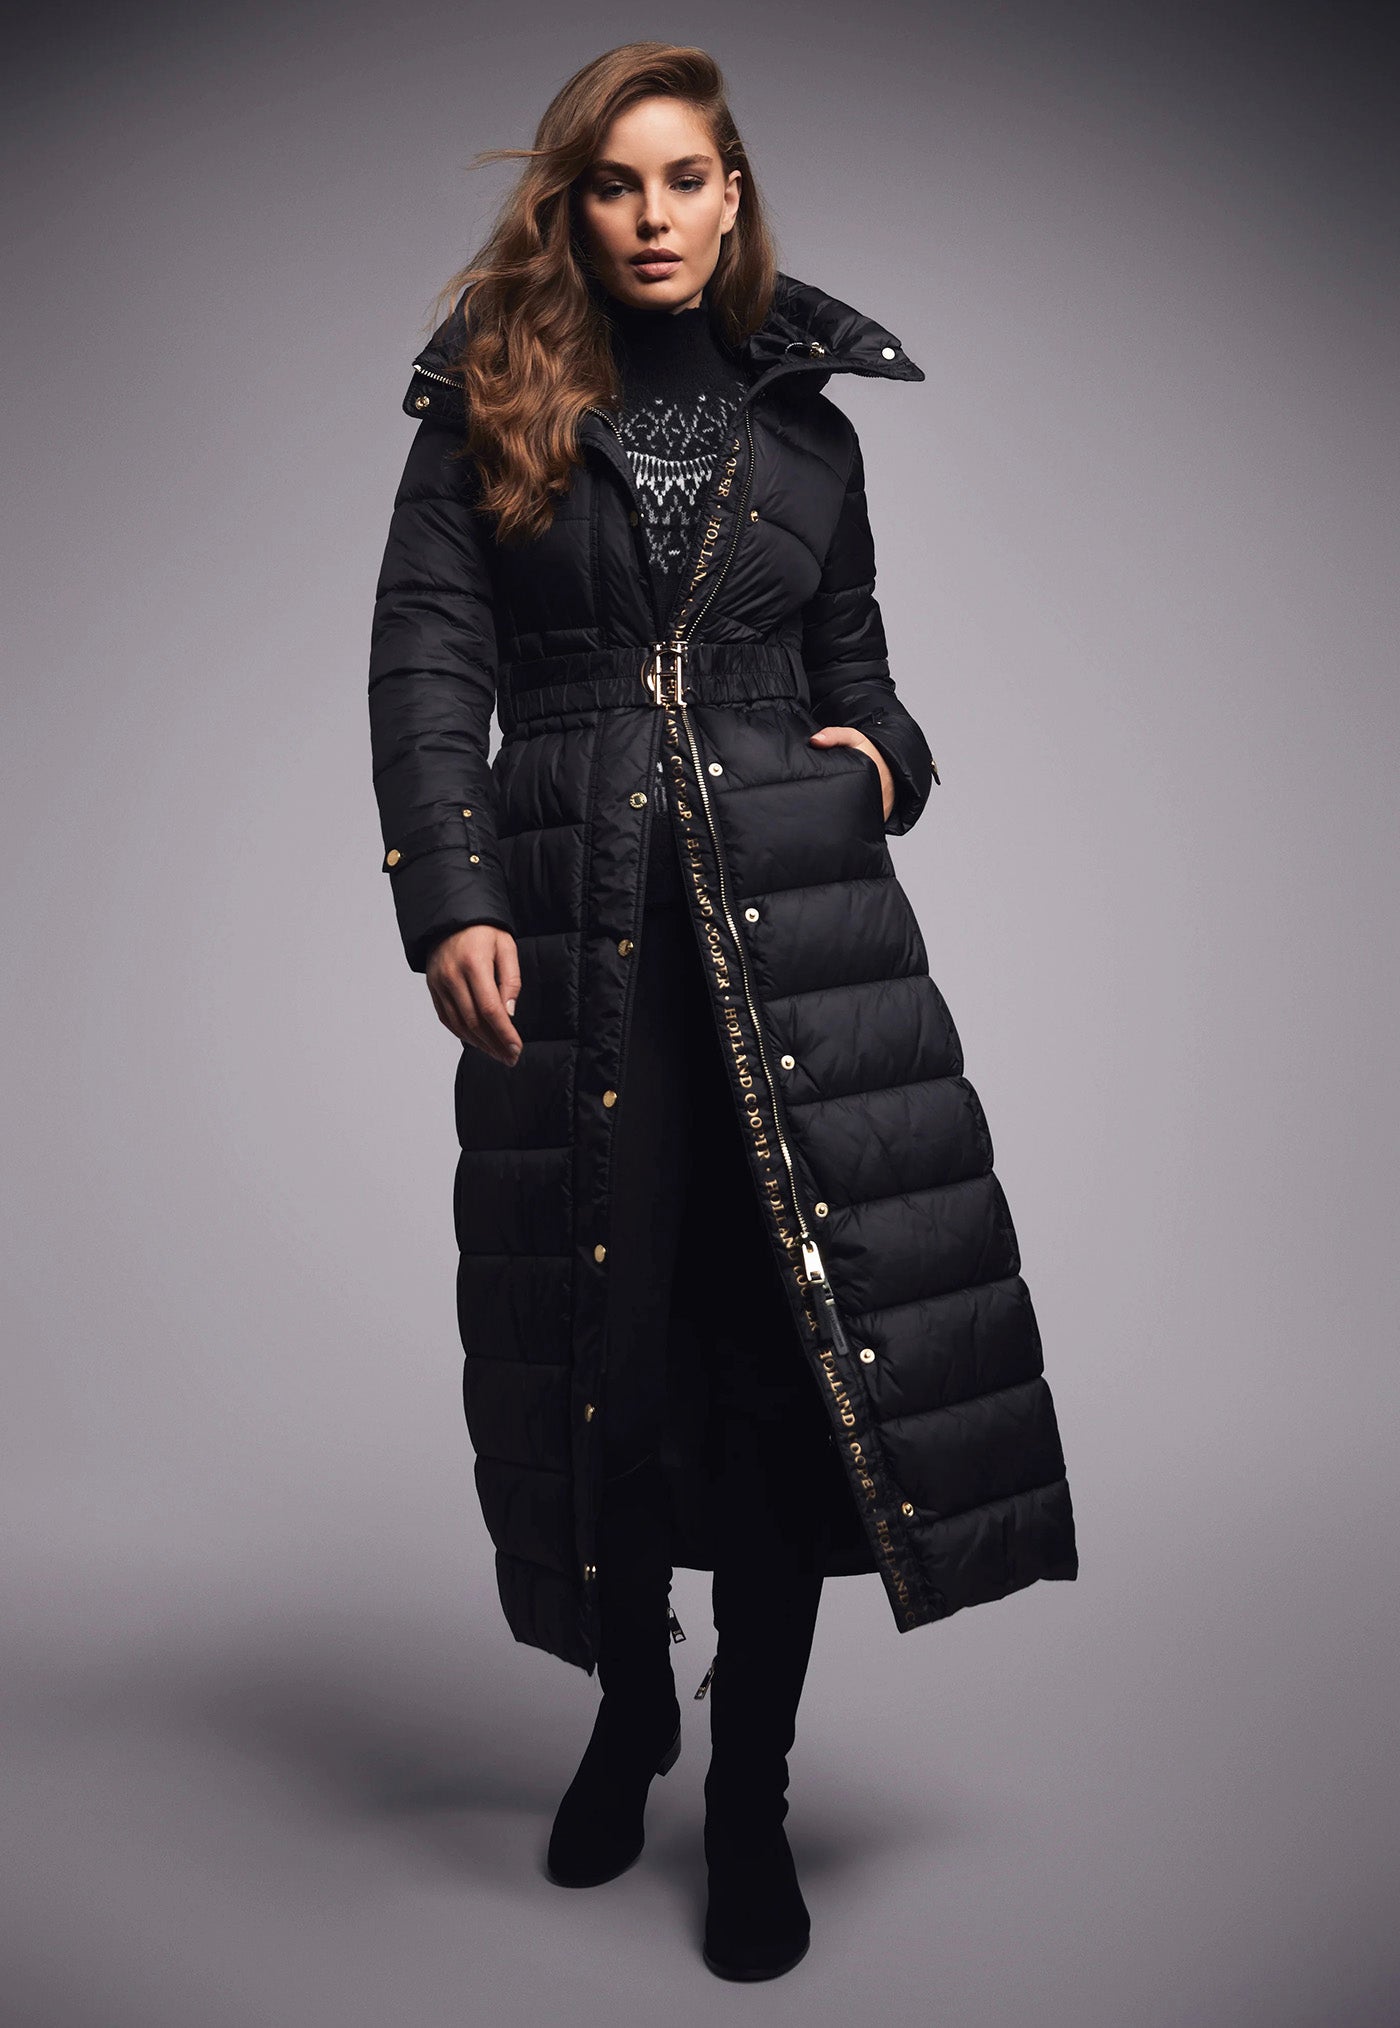 Arosa Coat - Black sold by Angel Divine